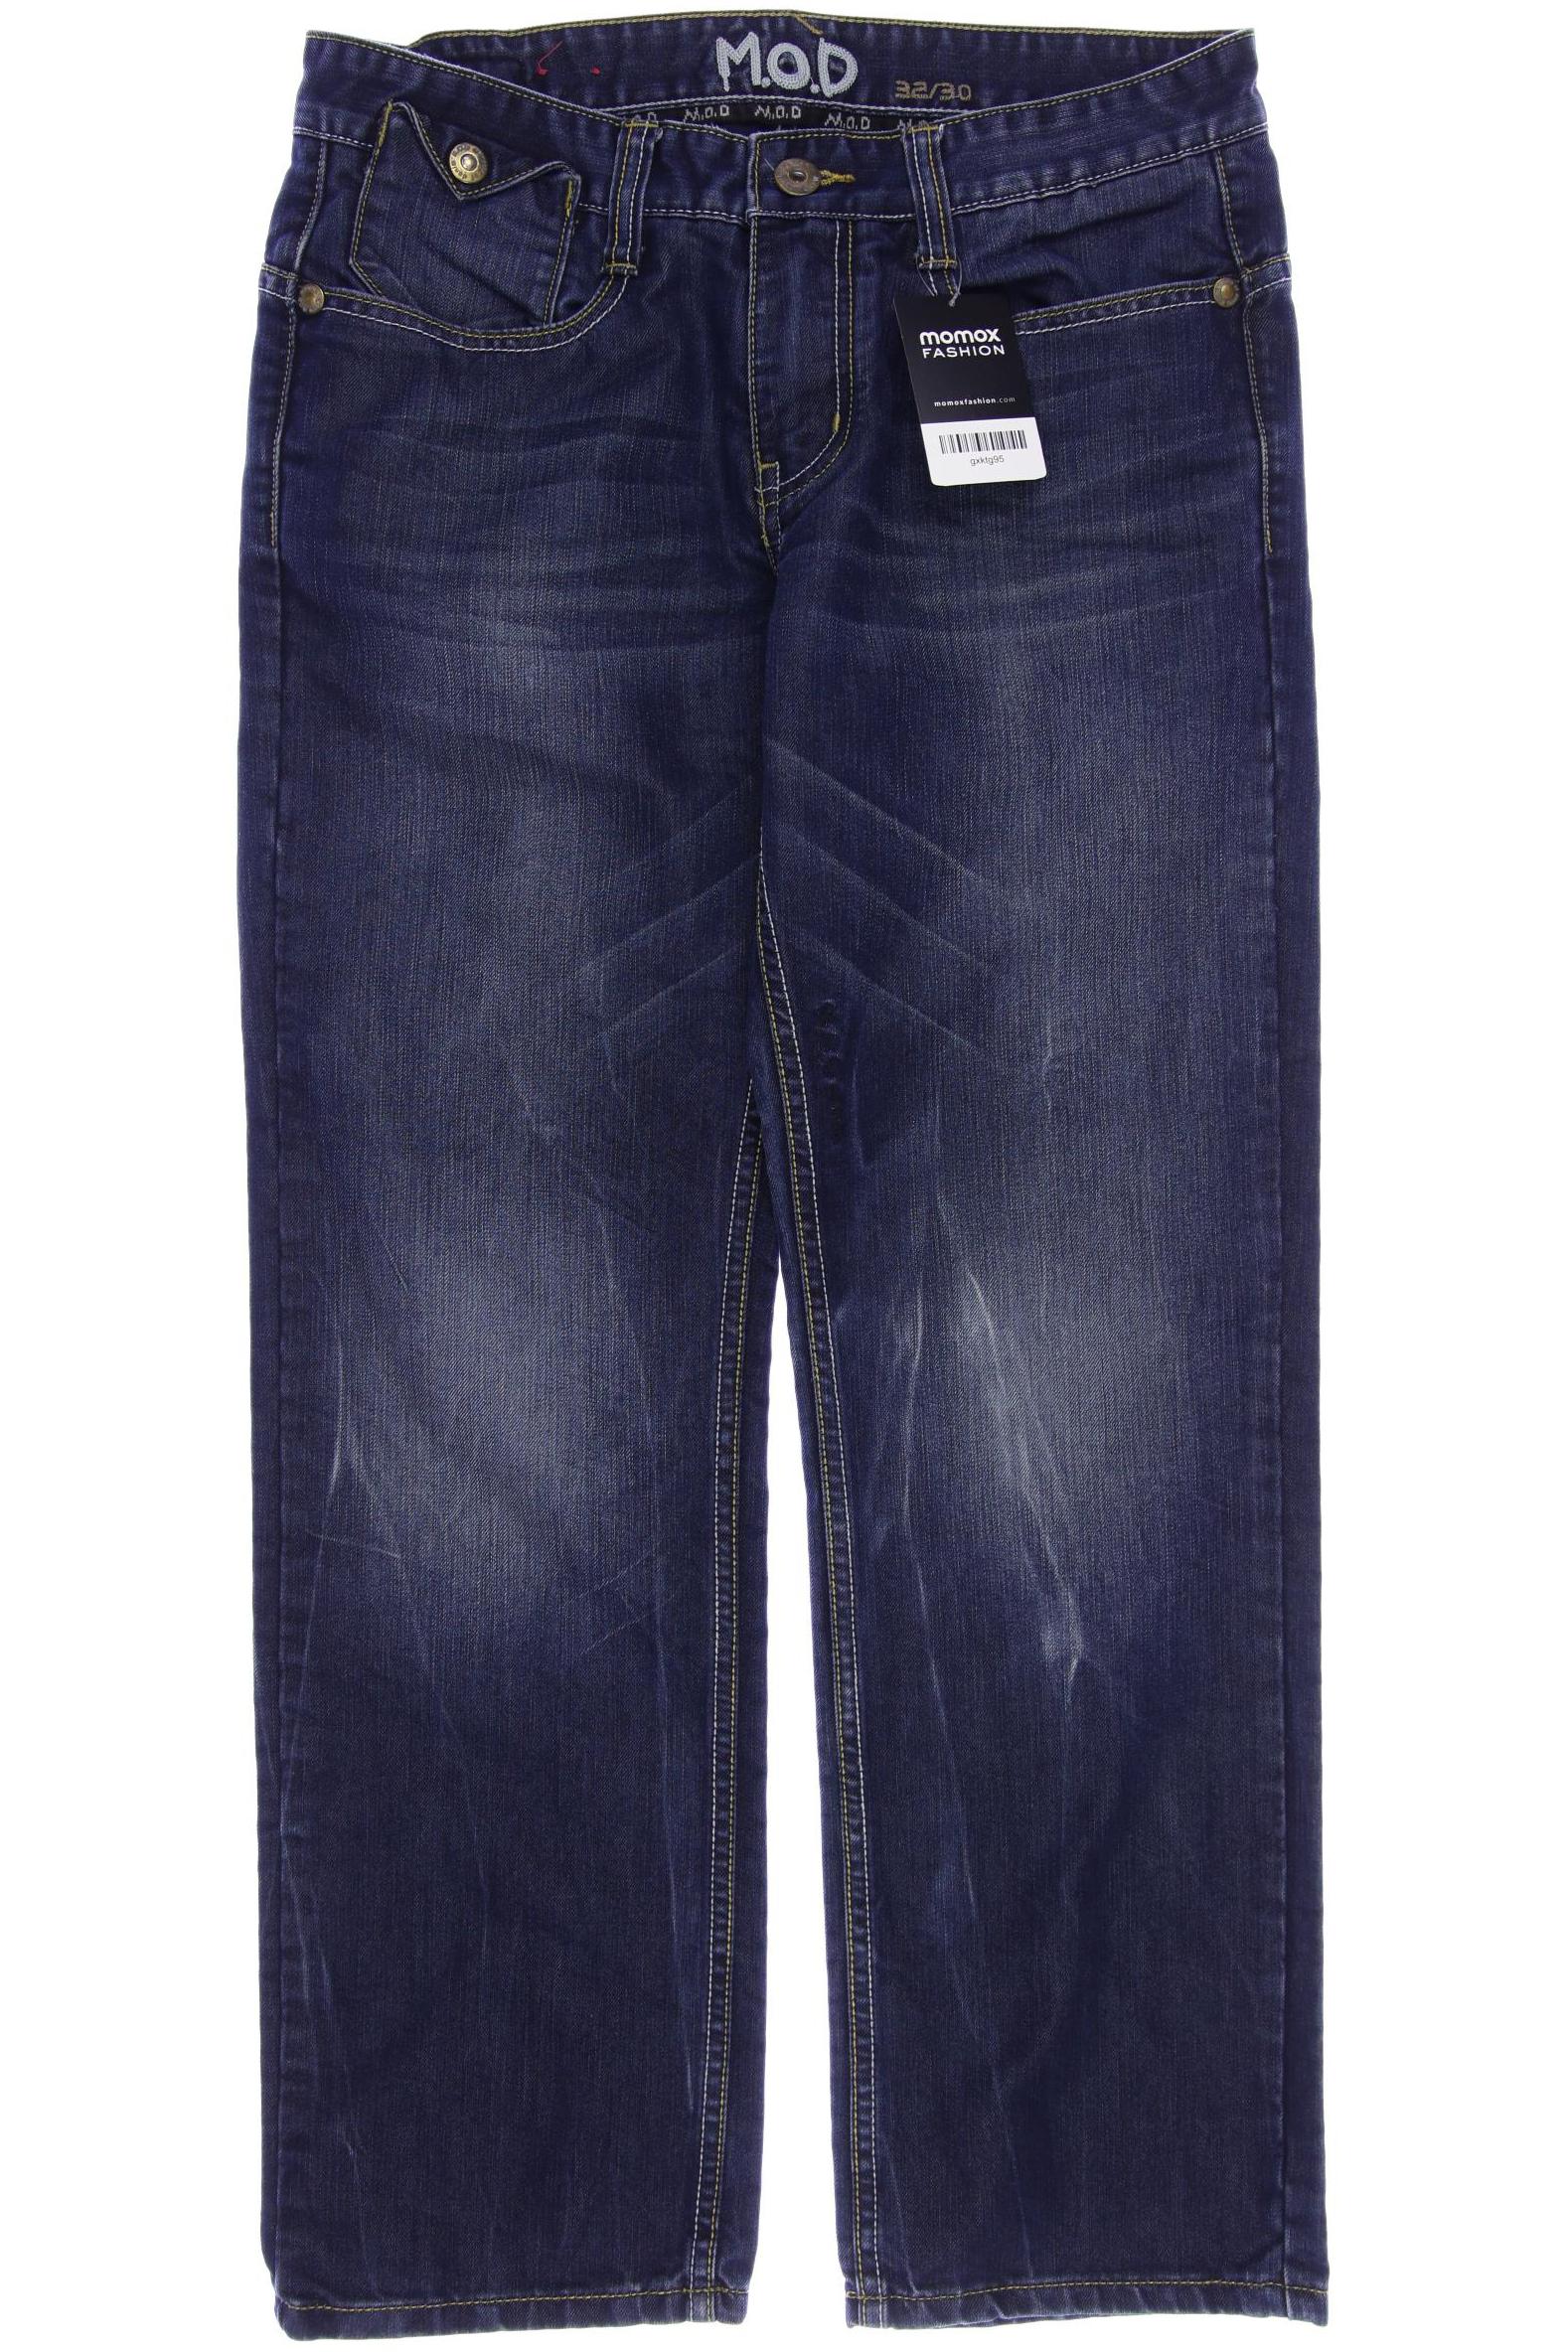 M.O.D. Miracle of Denim Damen Jeans, marineblau von M.O.D. Miracle of Denim